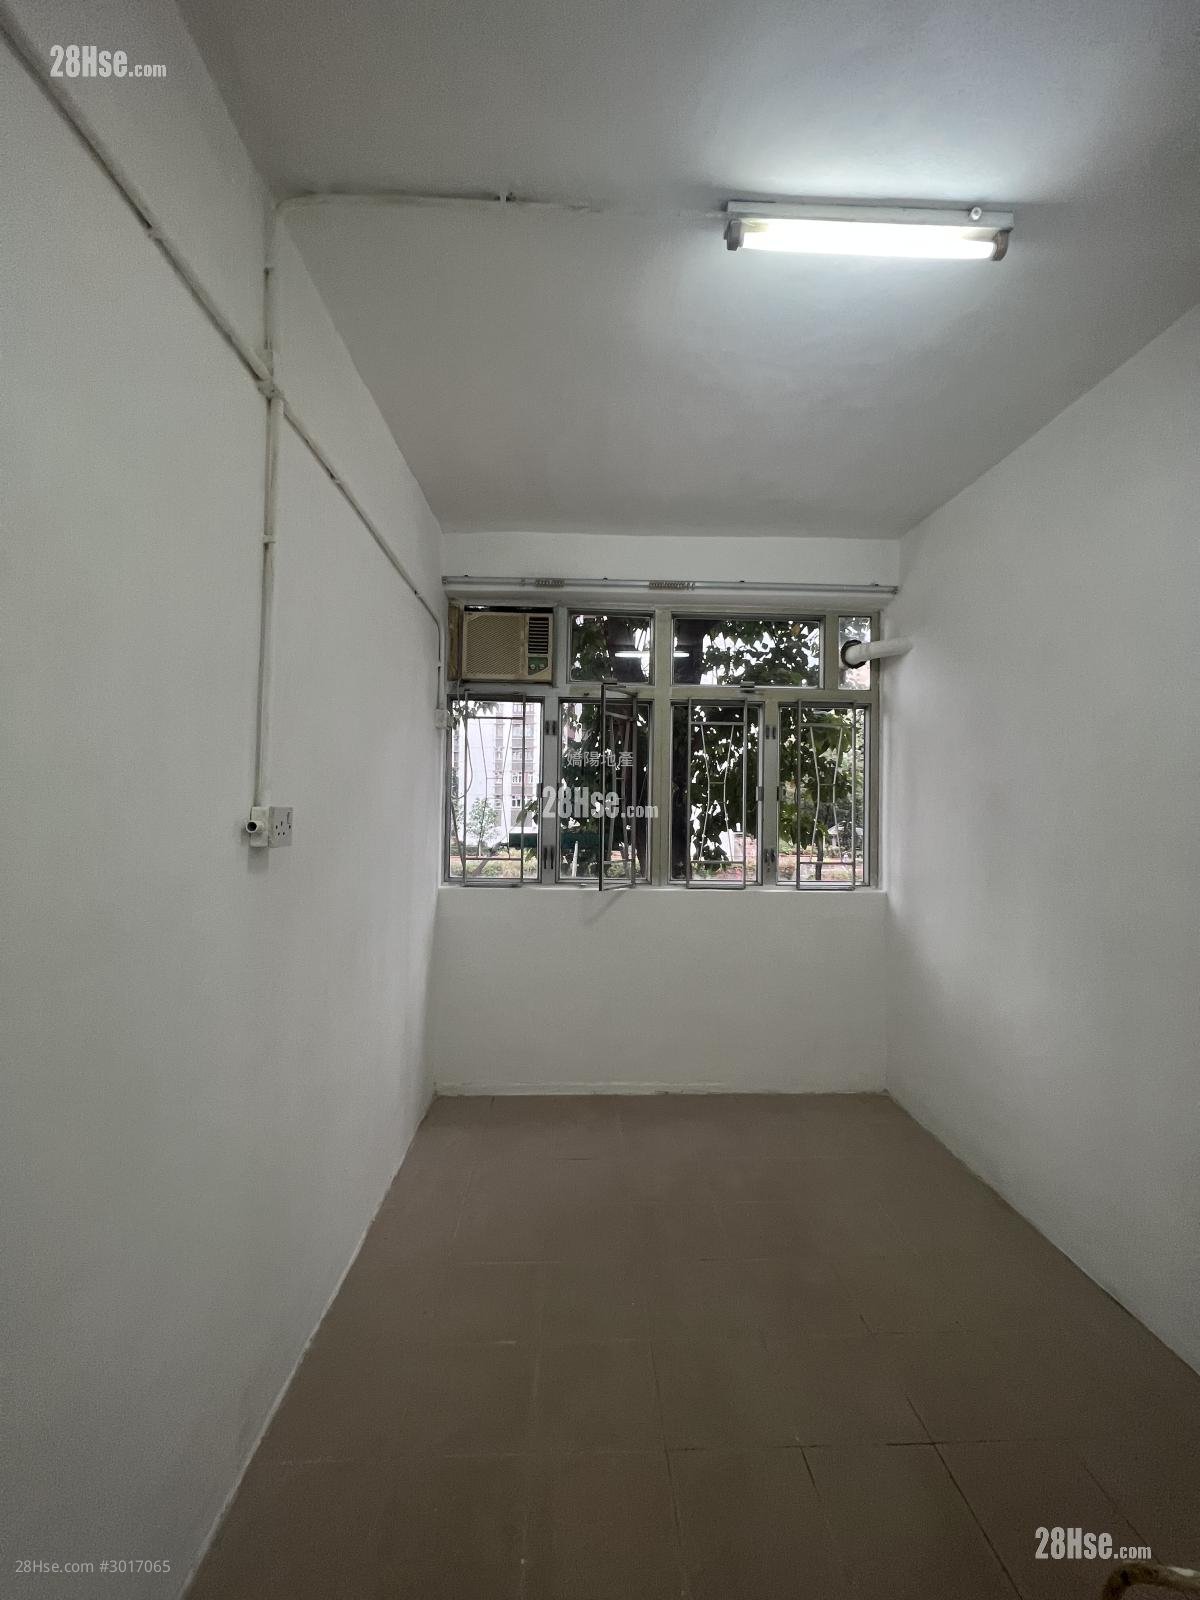 Yin Hing Building Rental Studio , 1 bathrooms 150 ft²